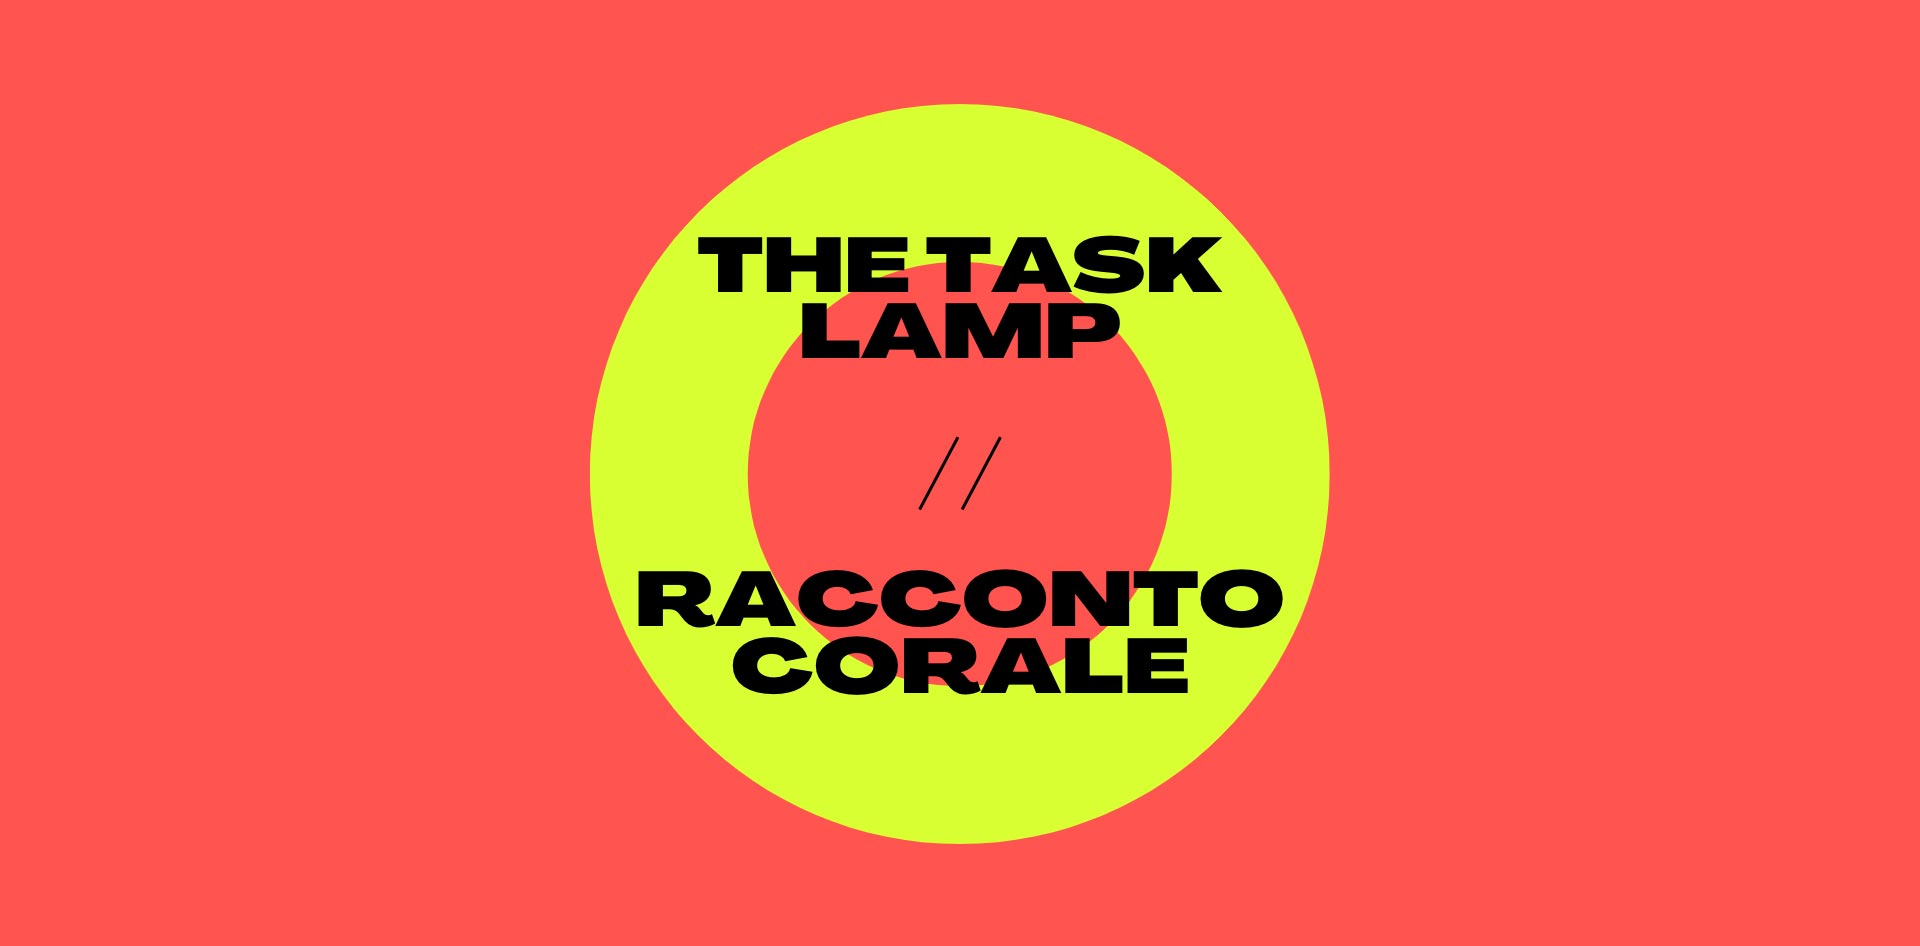 The Task Lamp